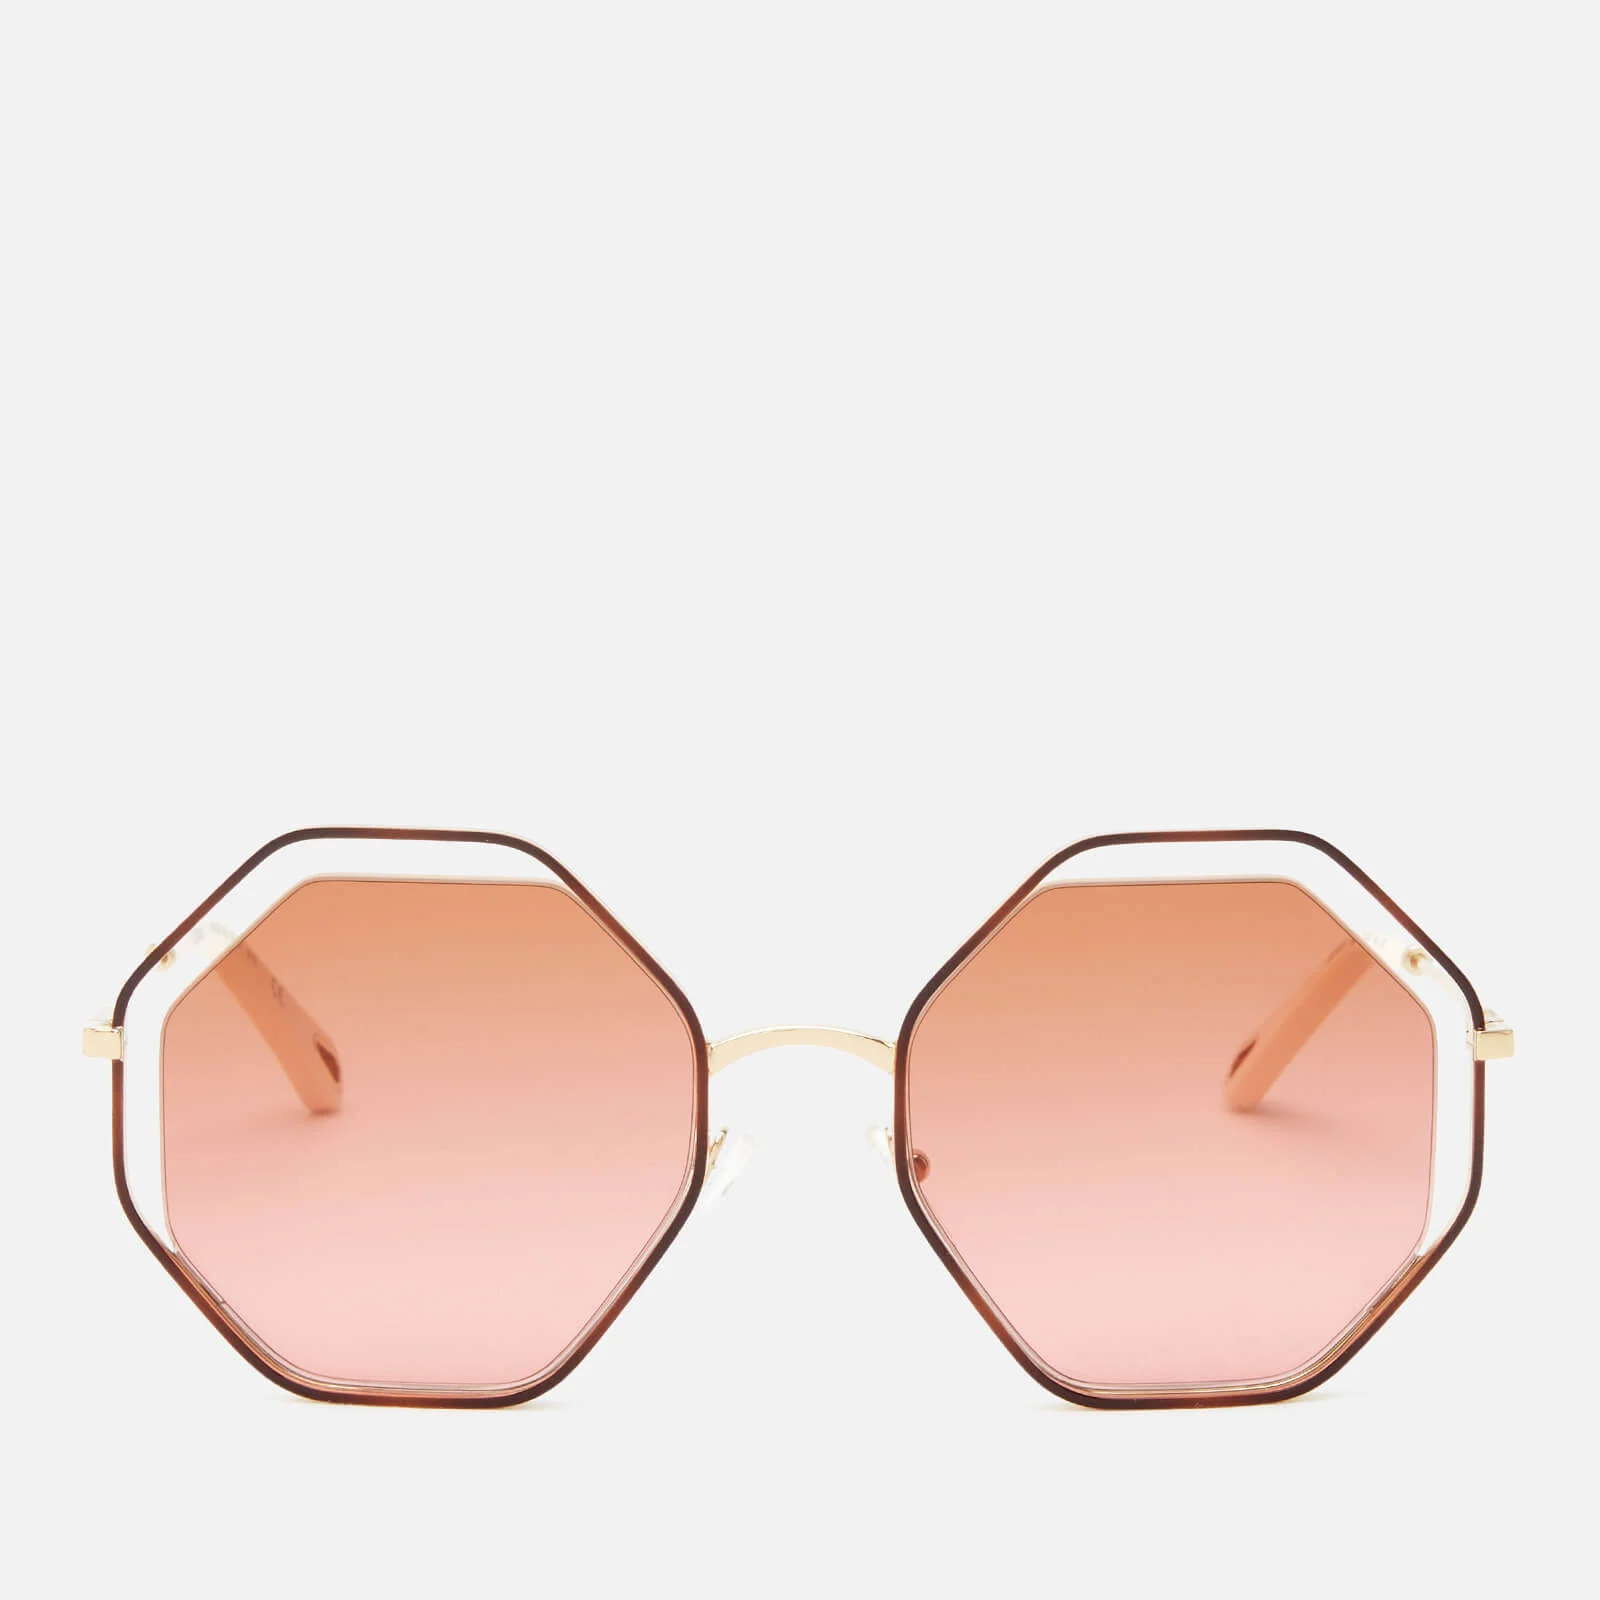 Chloé Women's Poppy Octagon Frame Sunglasses - Havana/Brick Rose Image 1